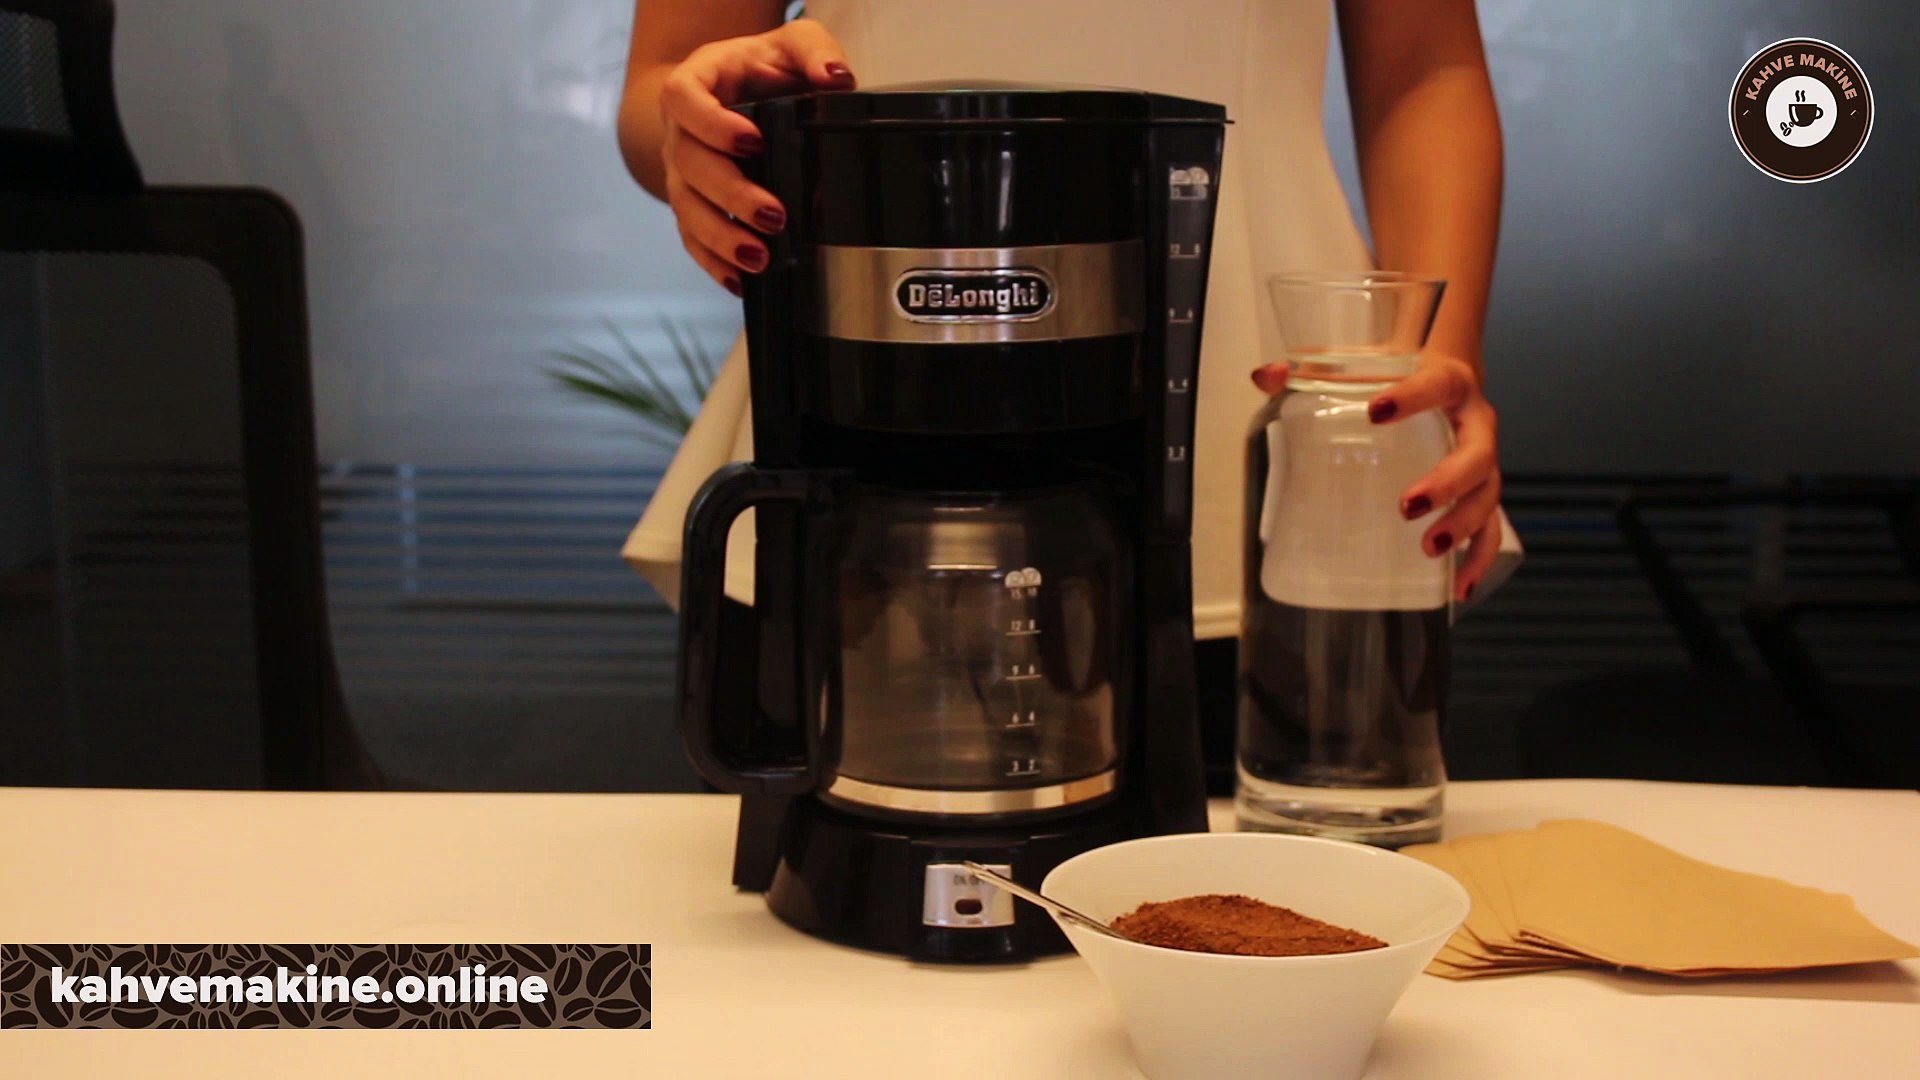 Kahve Makinesi, Delonghi Kahve Makinesi ile Filtre Kahve Nasıl Yapılır ? -  www.kahvemakinesi.online - Dailymotion Video